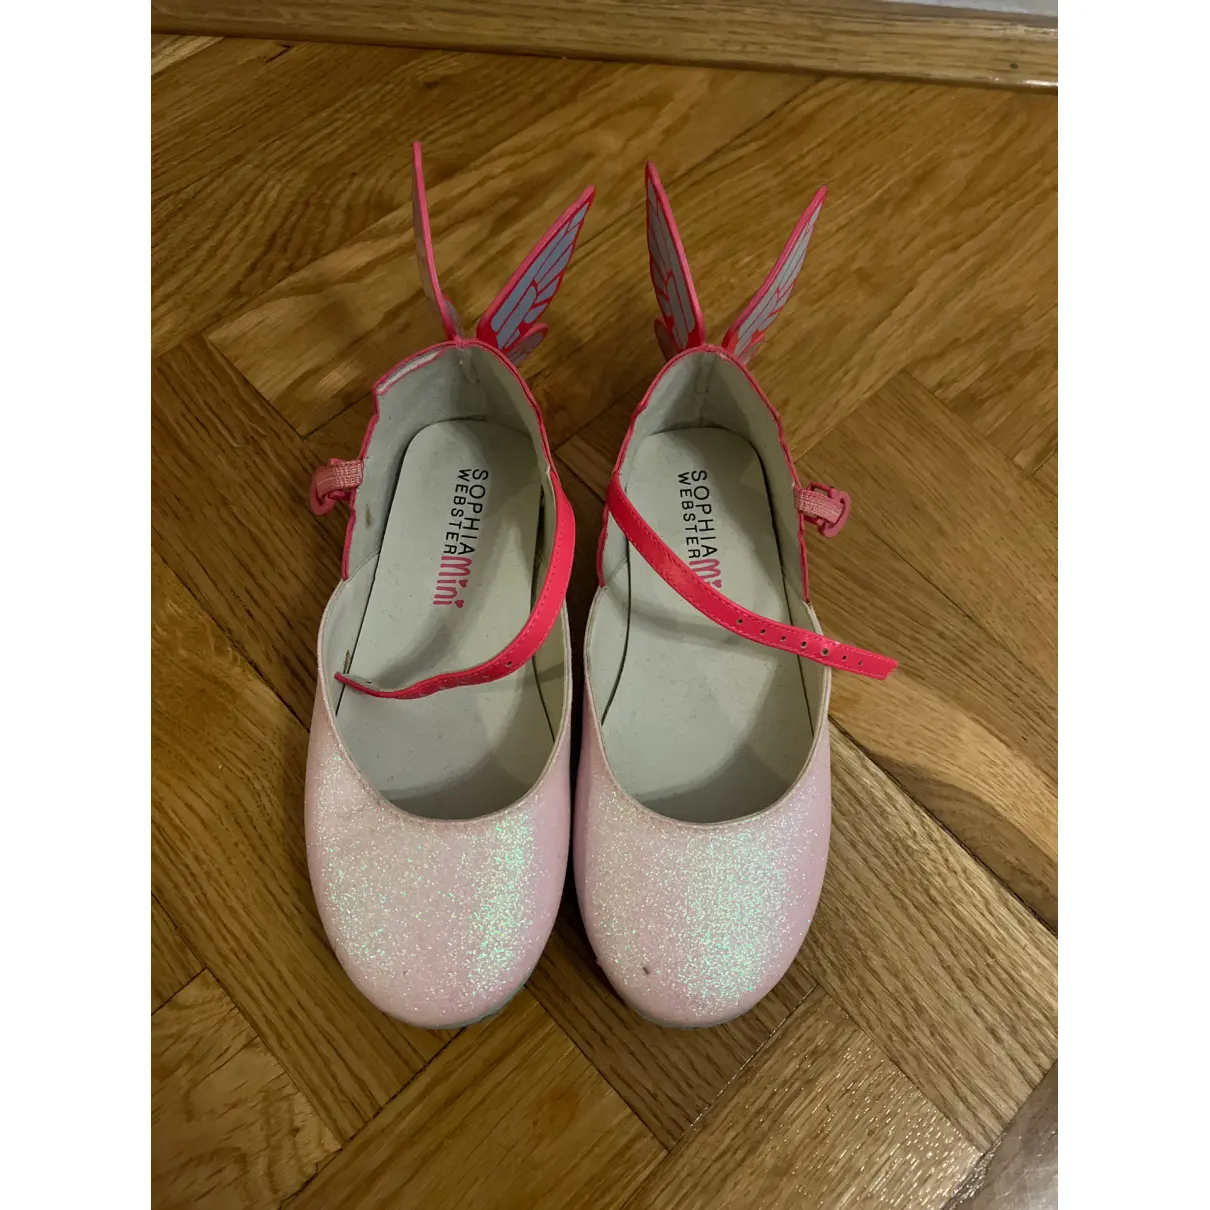 Buy Sophia Webster Glitter sandals online